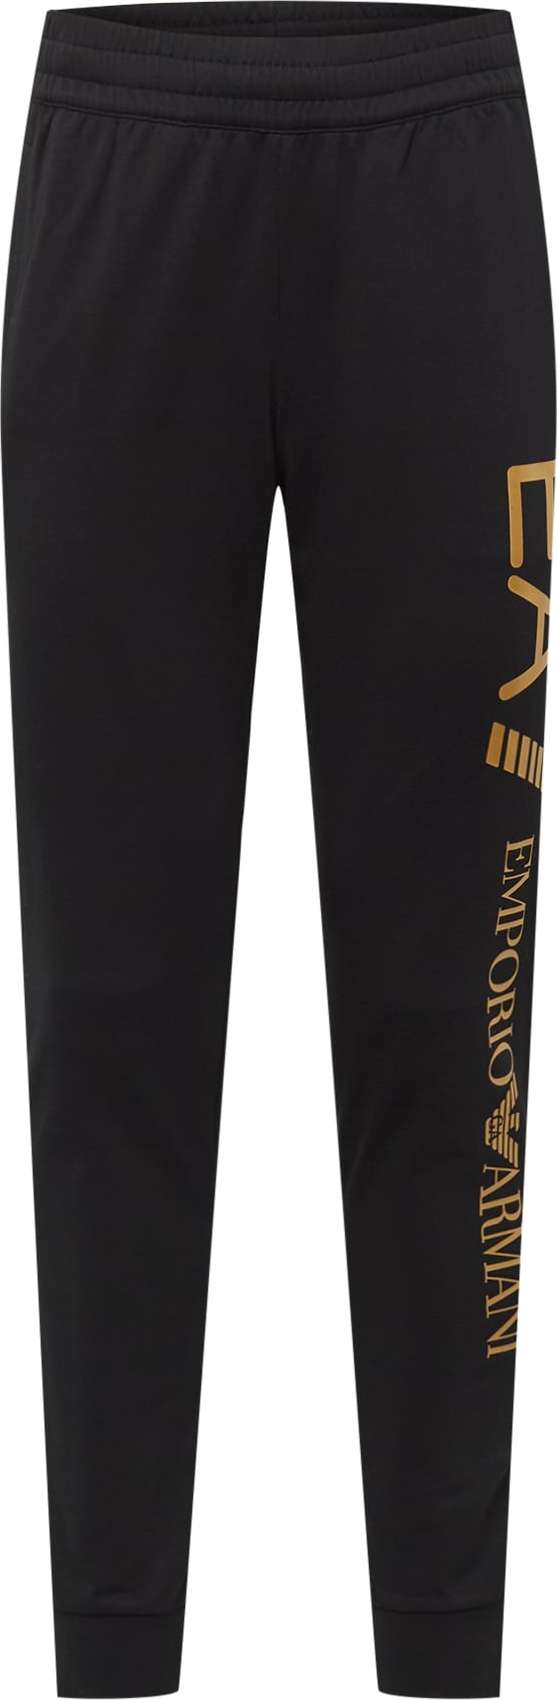 Kalhoty EA7 Emporio Armani medová / černá